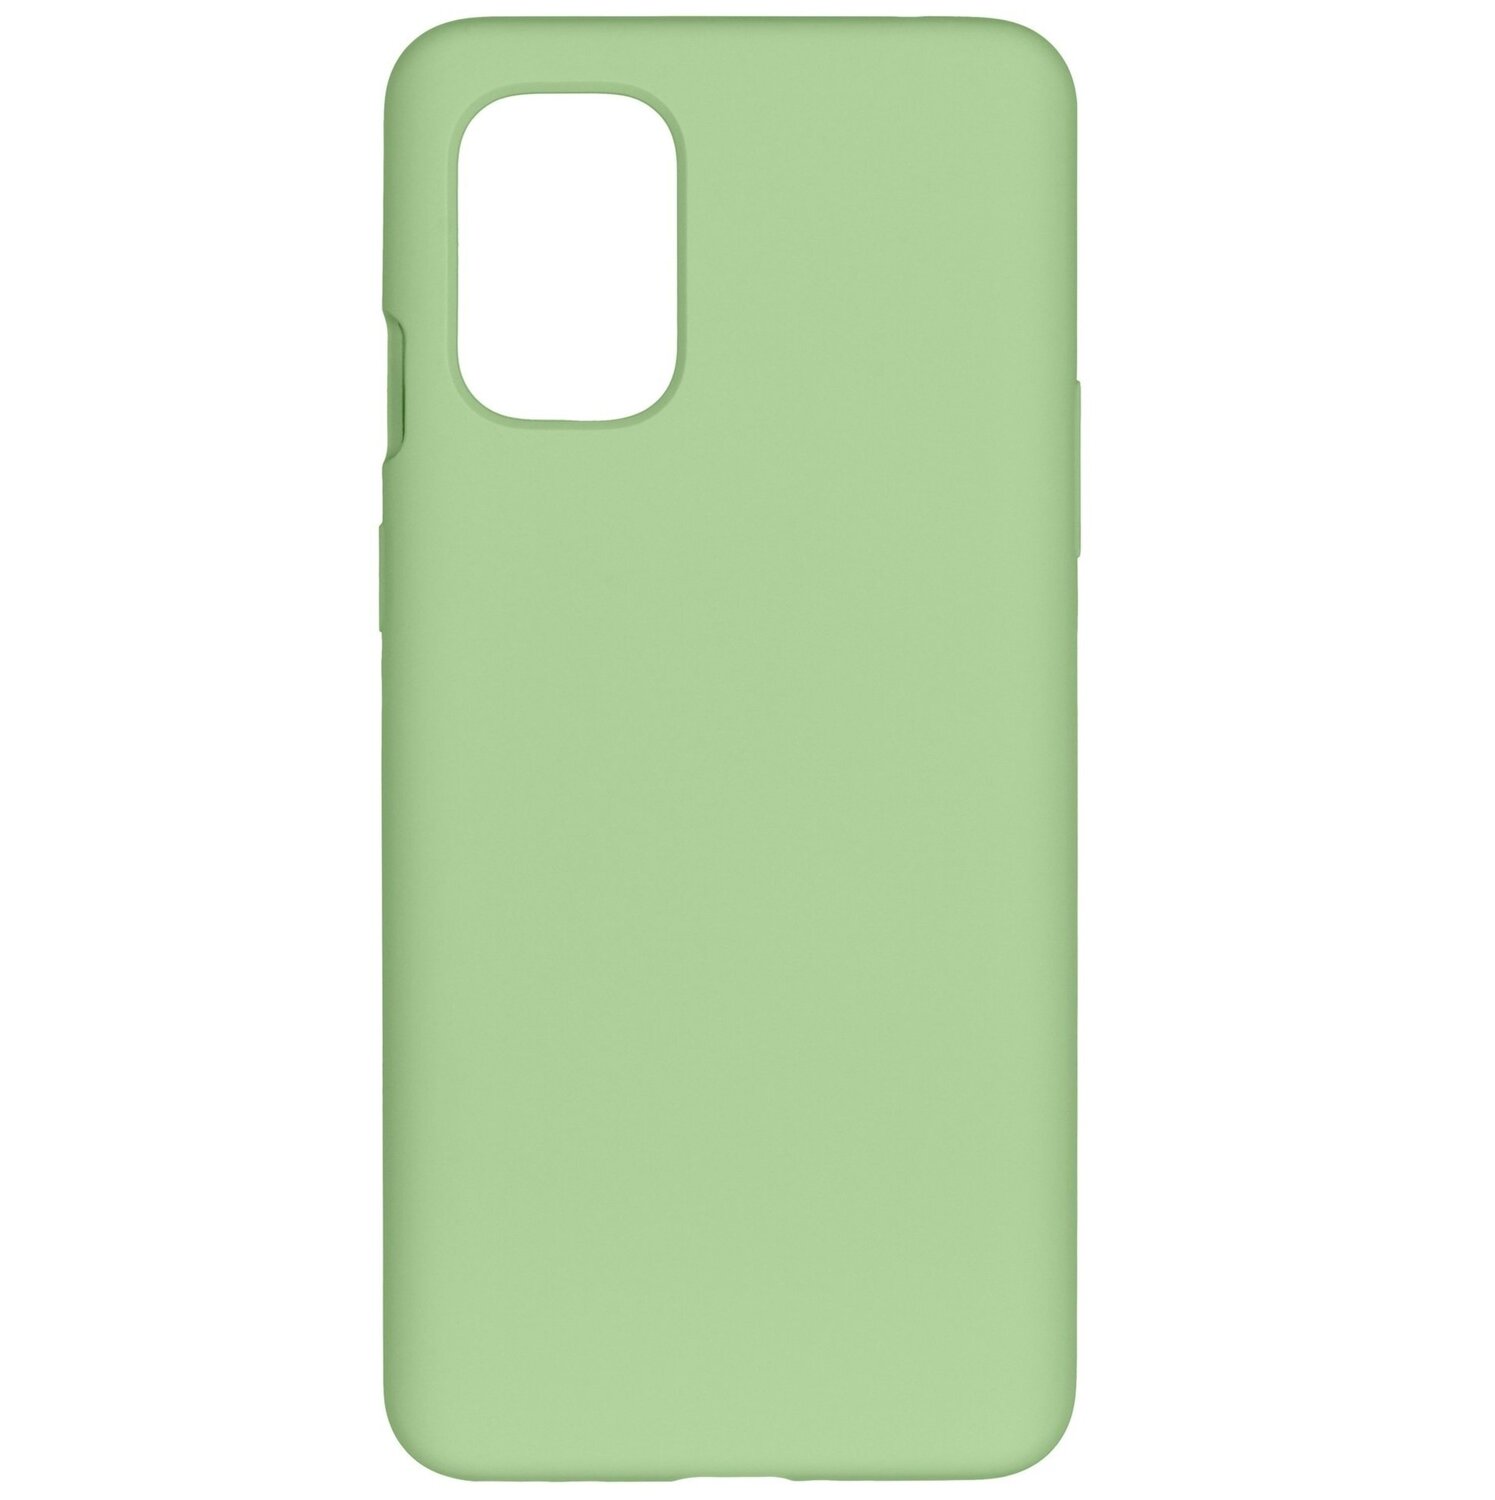 Чехол 2Е для OnePlus 8T KB2003 Solid Silicon Mint Green (2E-OP-8T-OCLS-GR) фото 